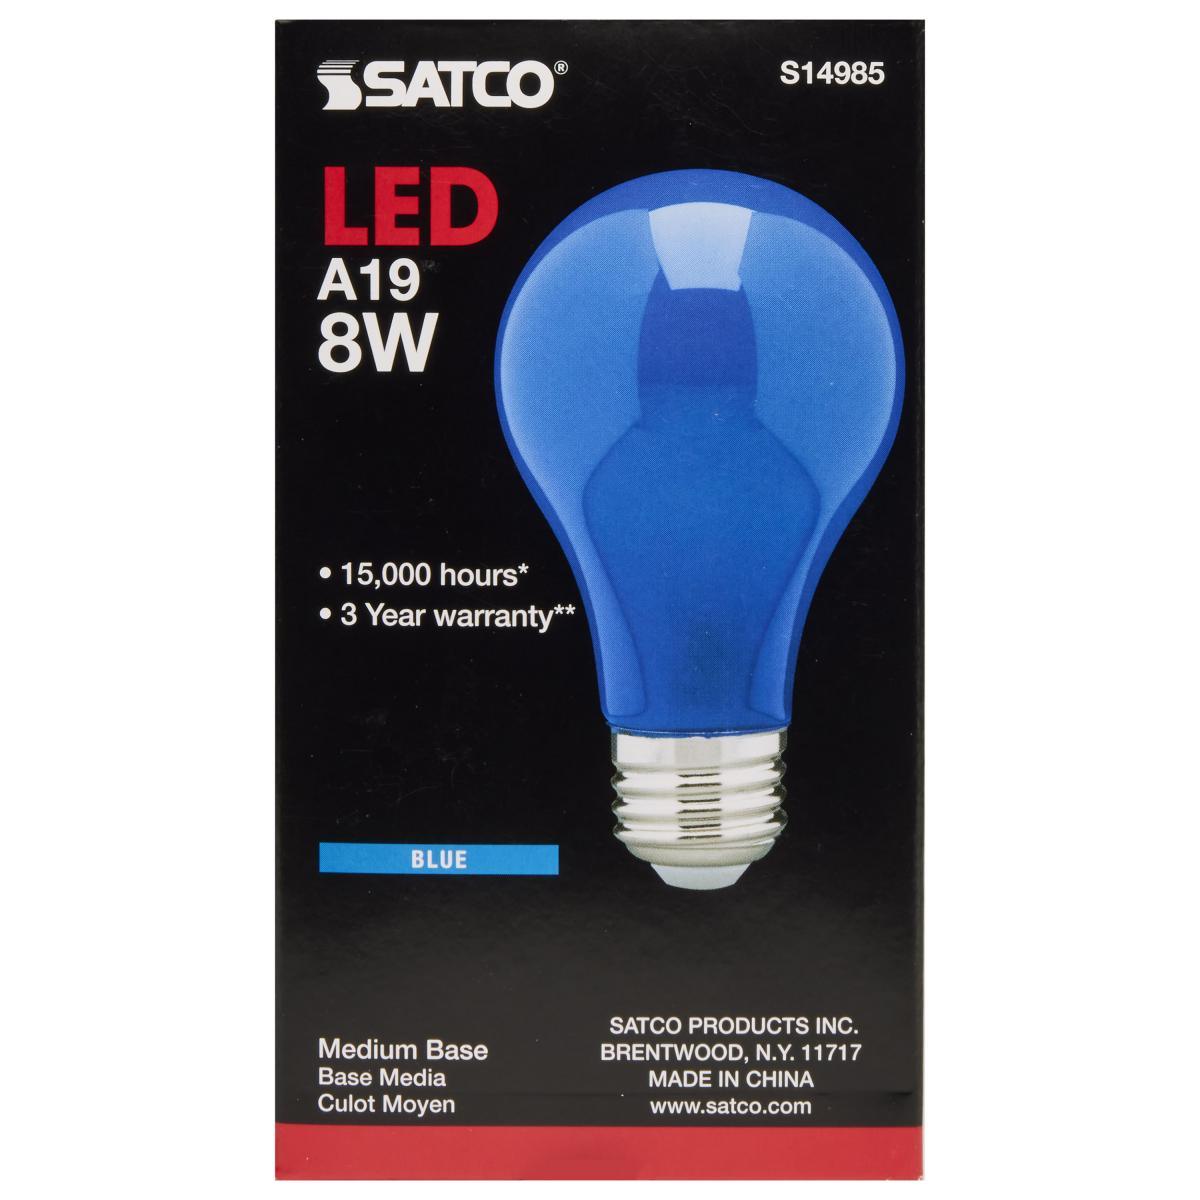 A19 LED Bulb, 100W Equivalent, 8 Watt, Lumens, Blue, E26 Medium Base, Frosted Finish